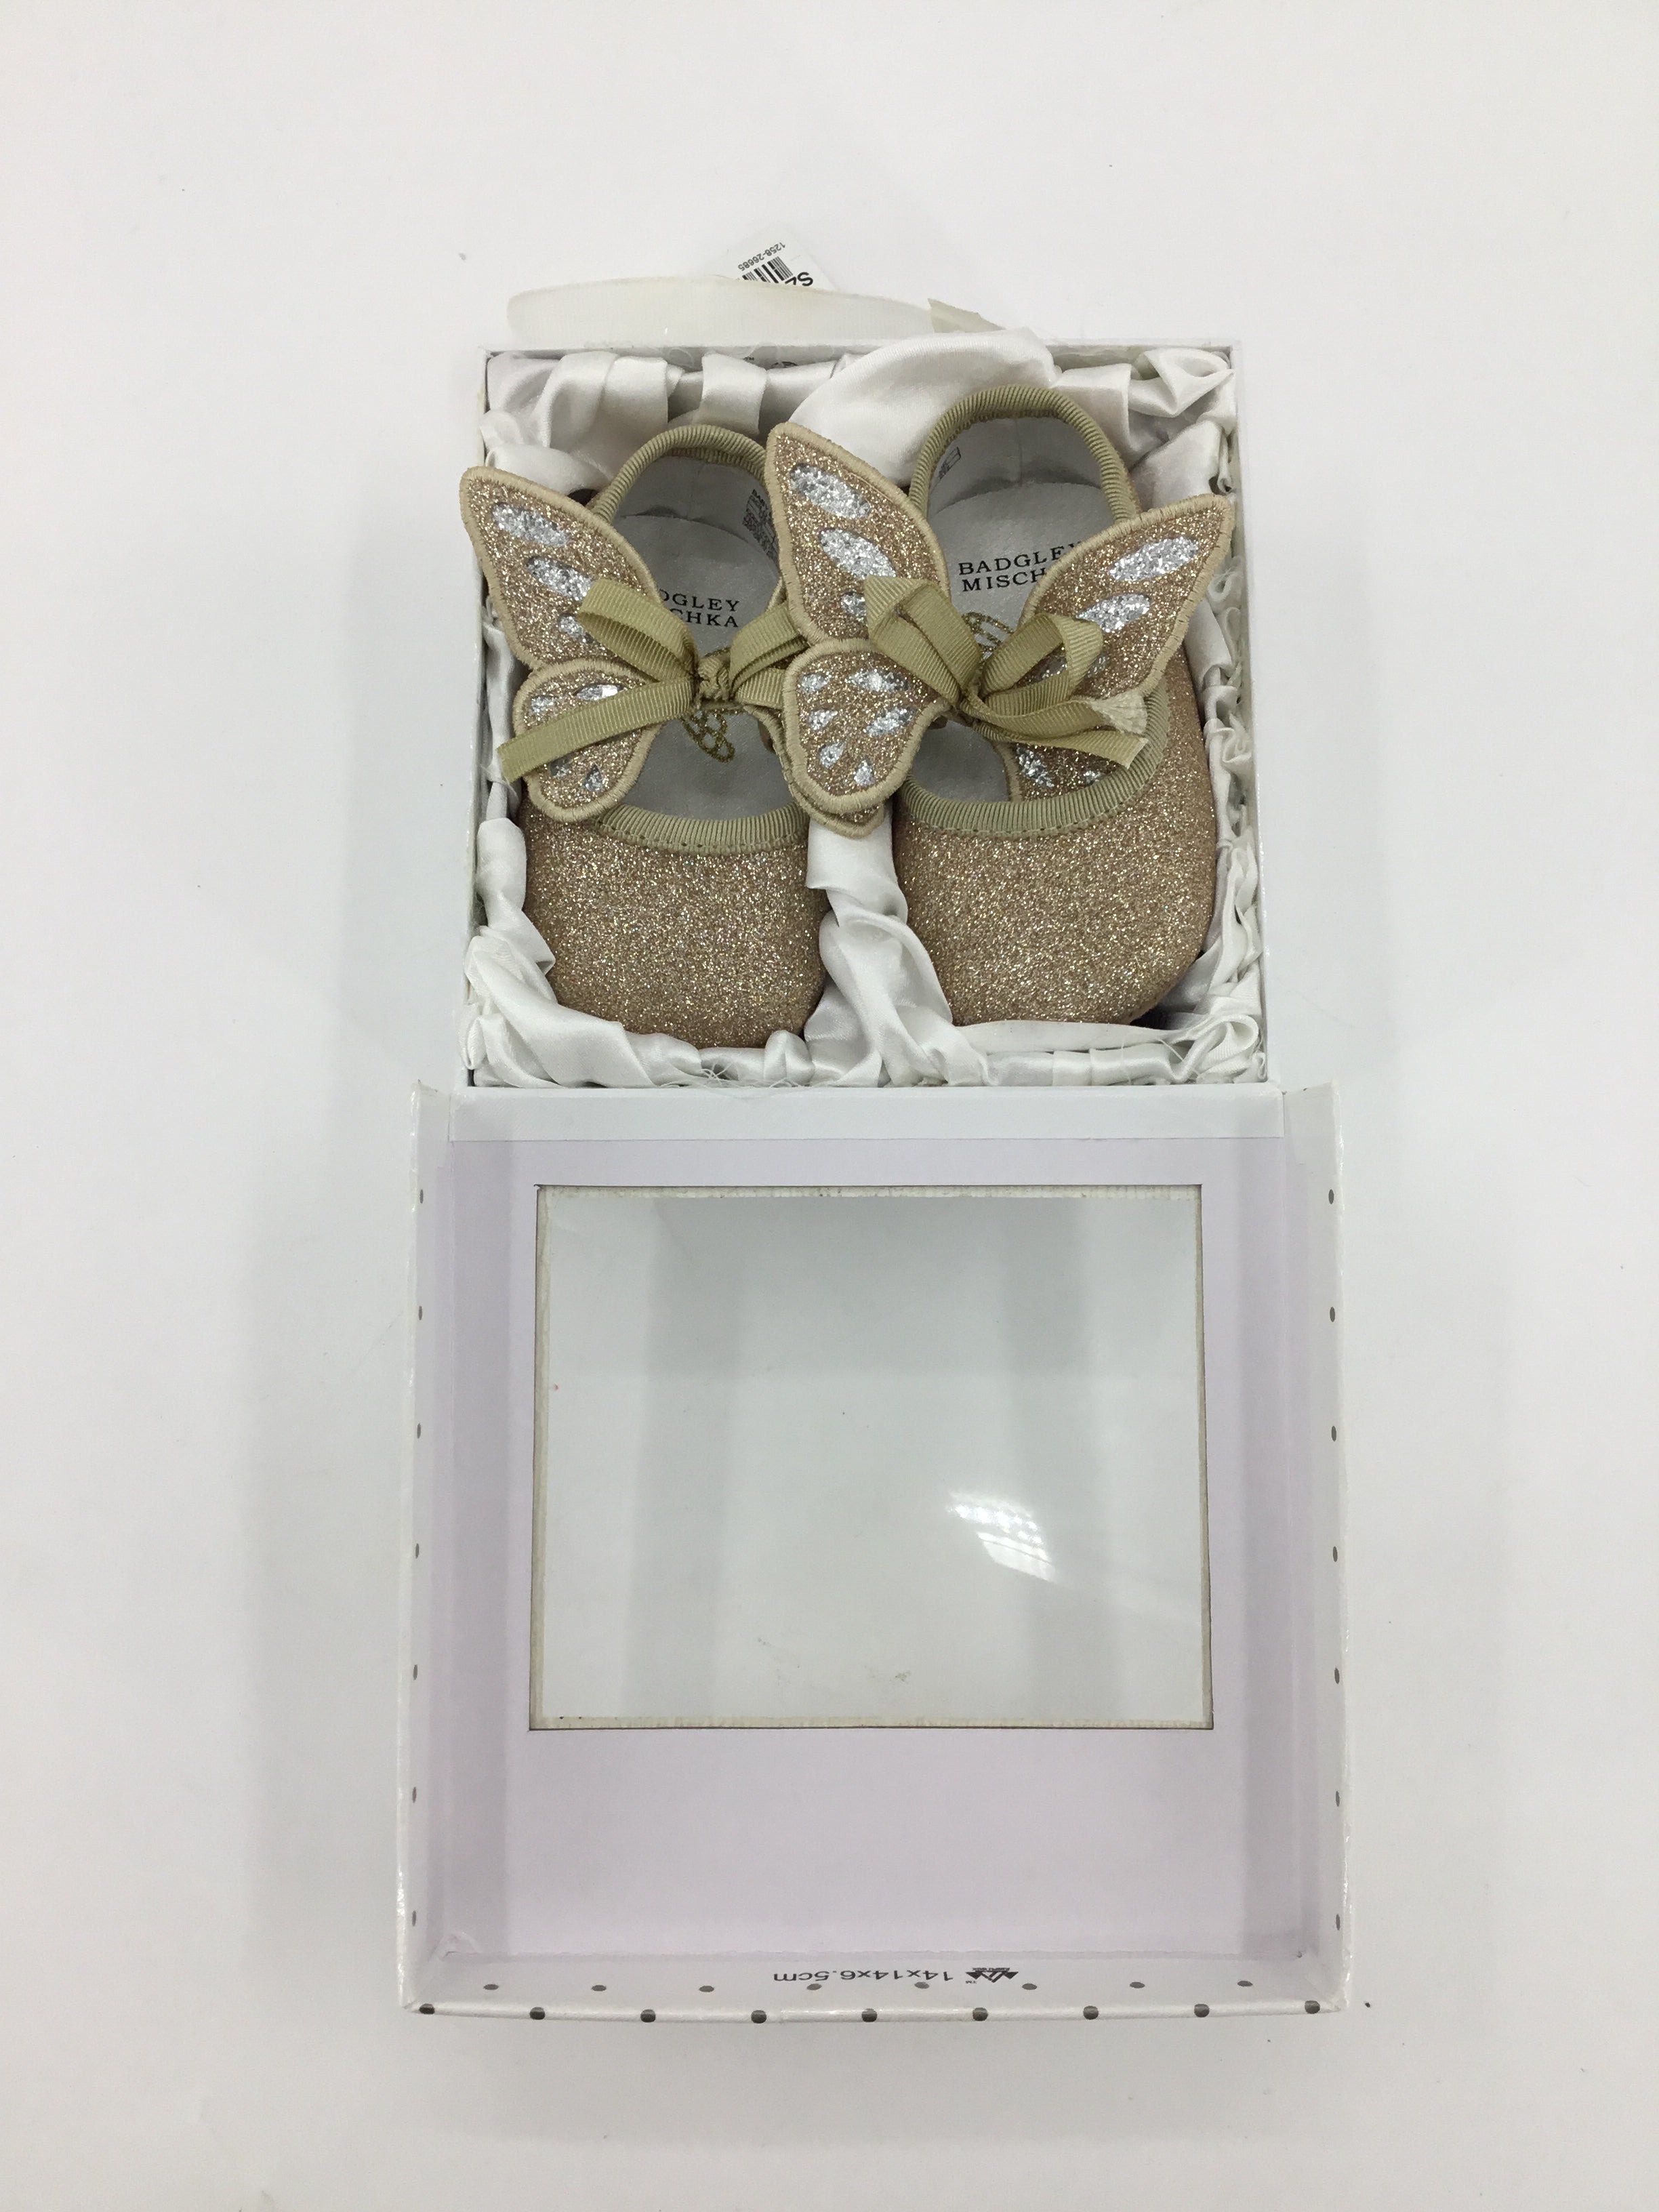 Badgley Mischka Child Size 3 Toddler Gold Baby/Walker Shoes